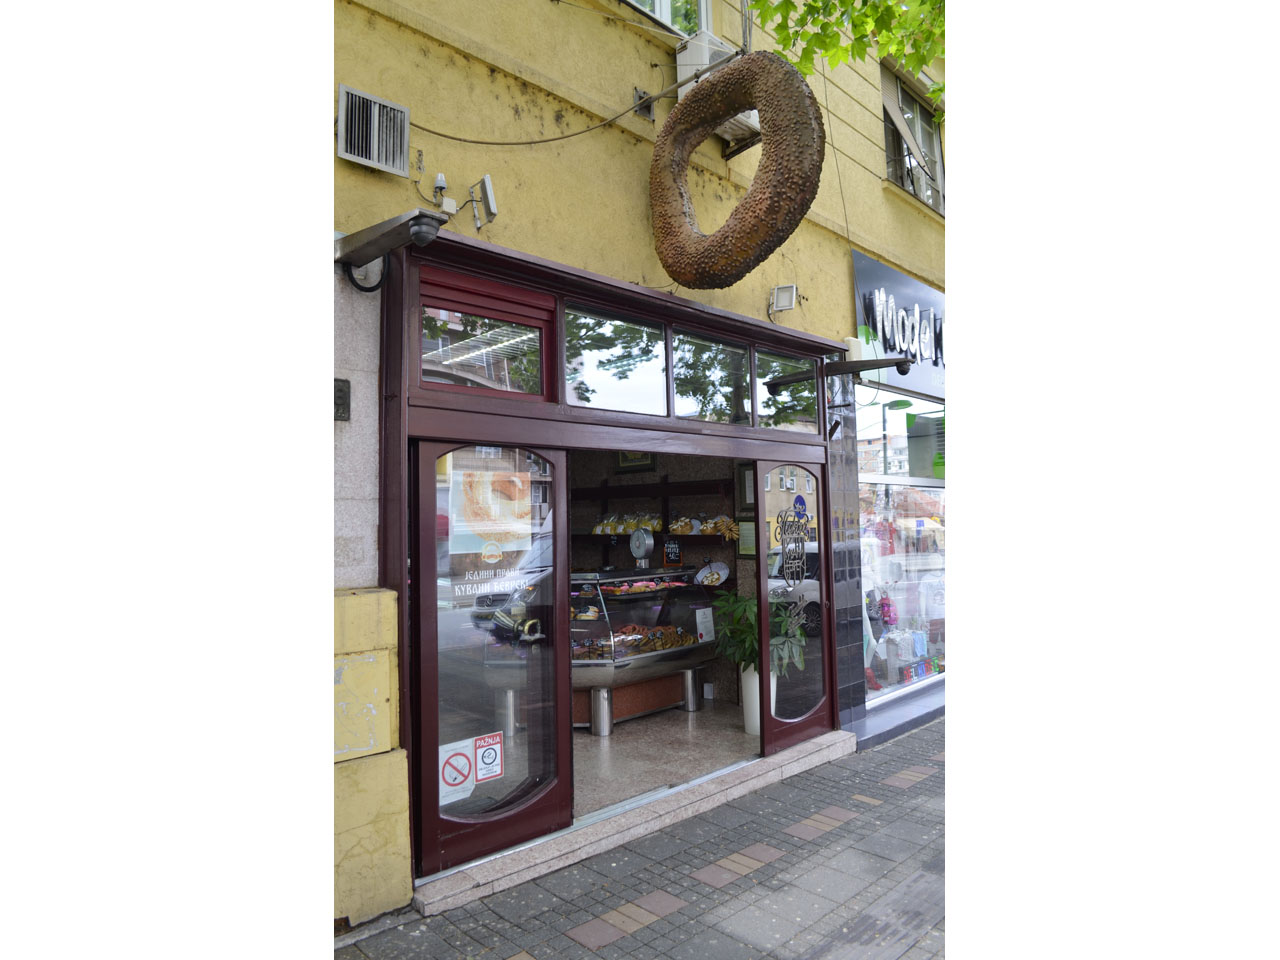 BOILED BAGEL Bakeries, bakery equipment Belgrade - Photo 1